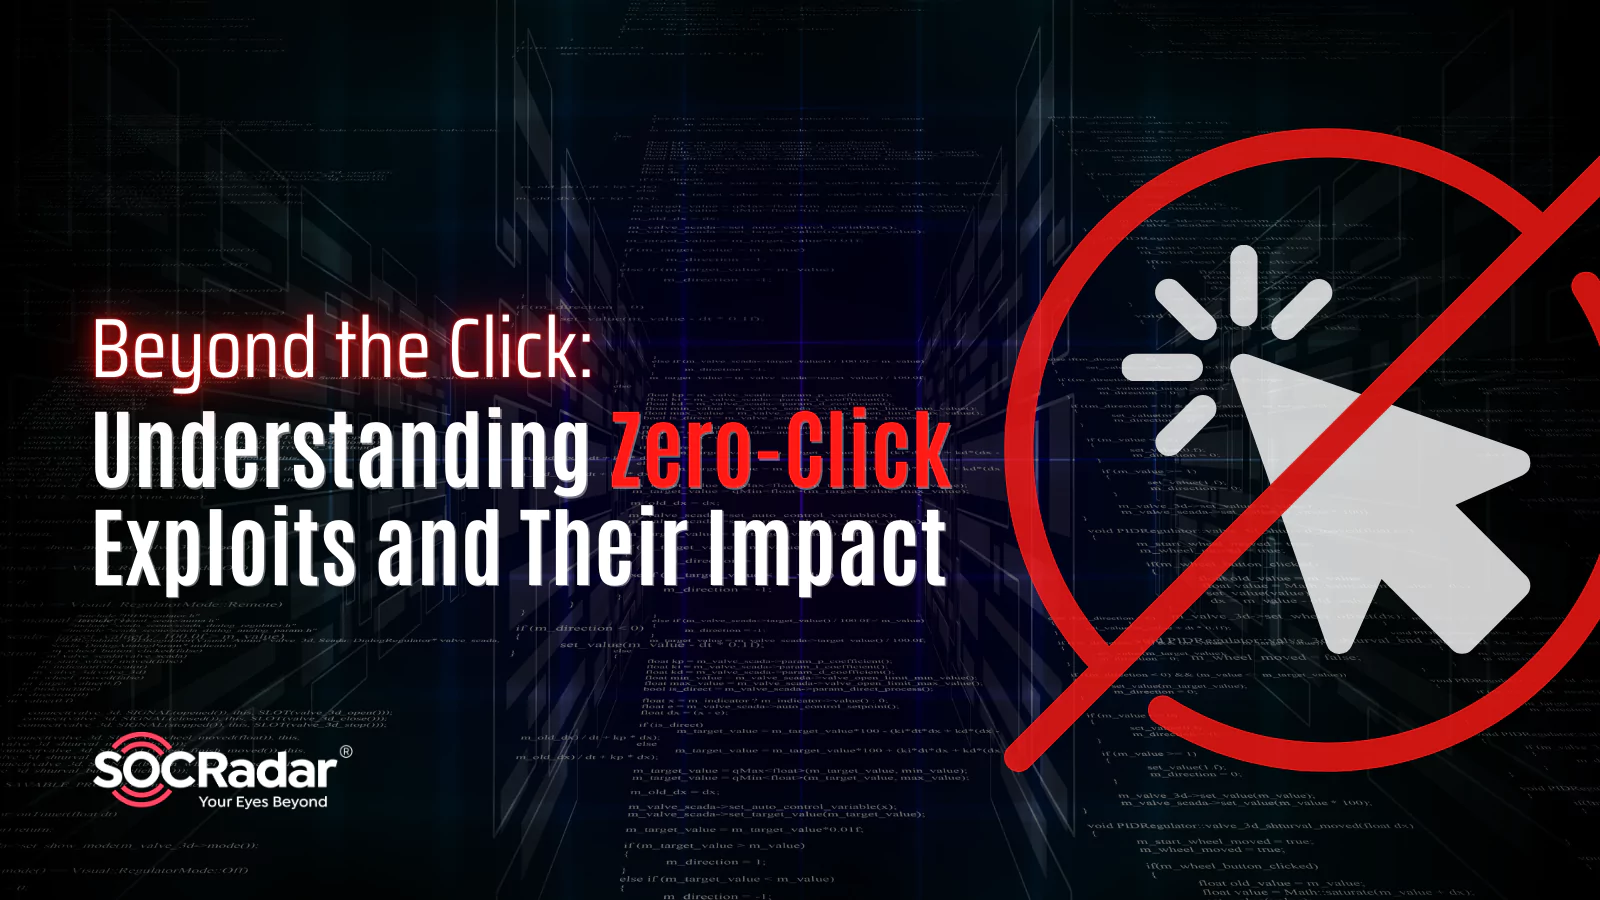 SOCRadar® Cyber Intelligence Inc. | Beyond the Click: Understanding Zero-Click Exploits and Their Impact